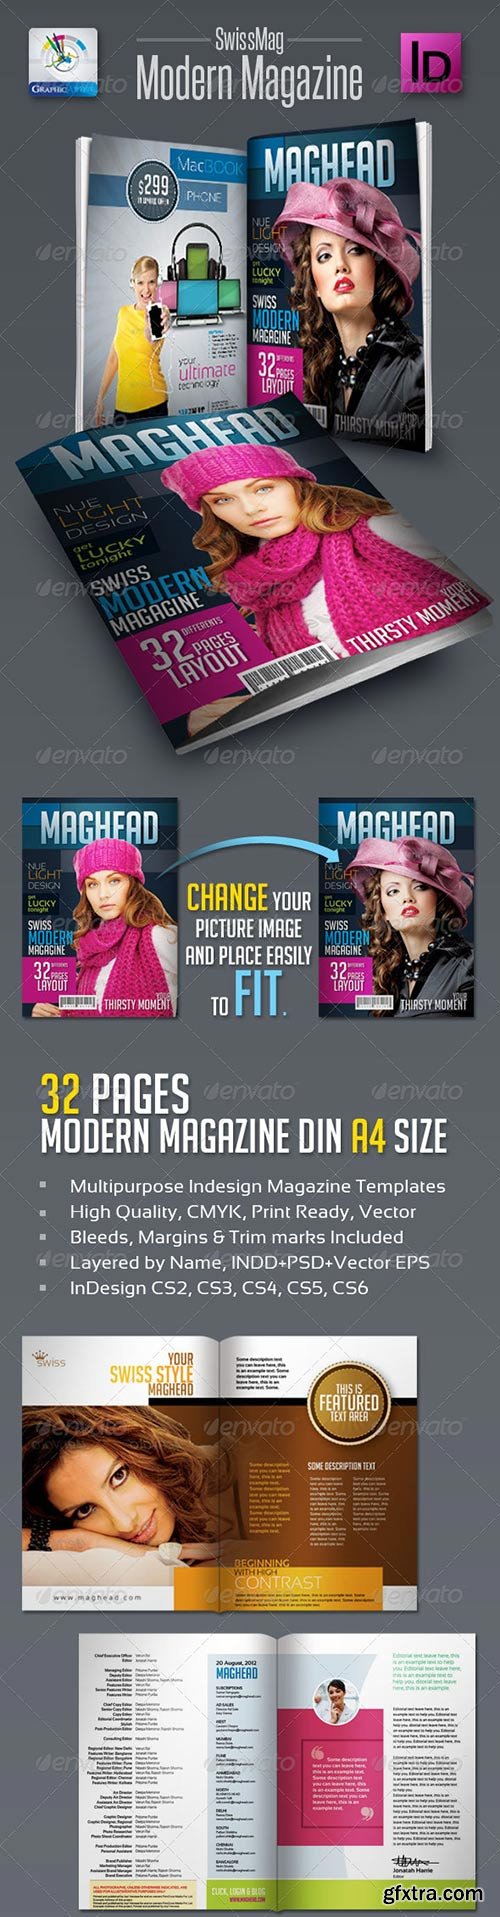 Graphicriver - SwissMag Modern Magazine Templates 32pages 2579872